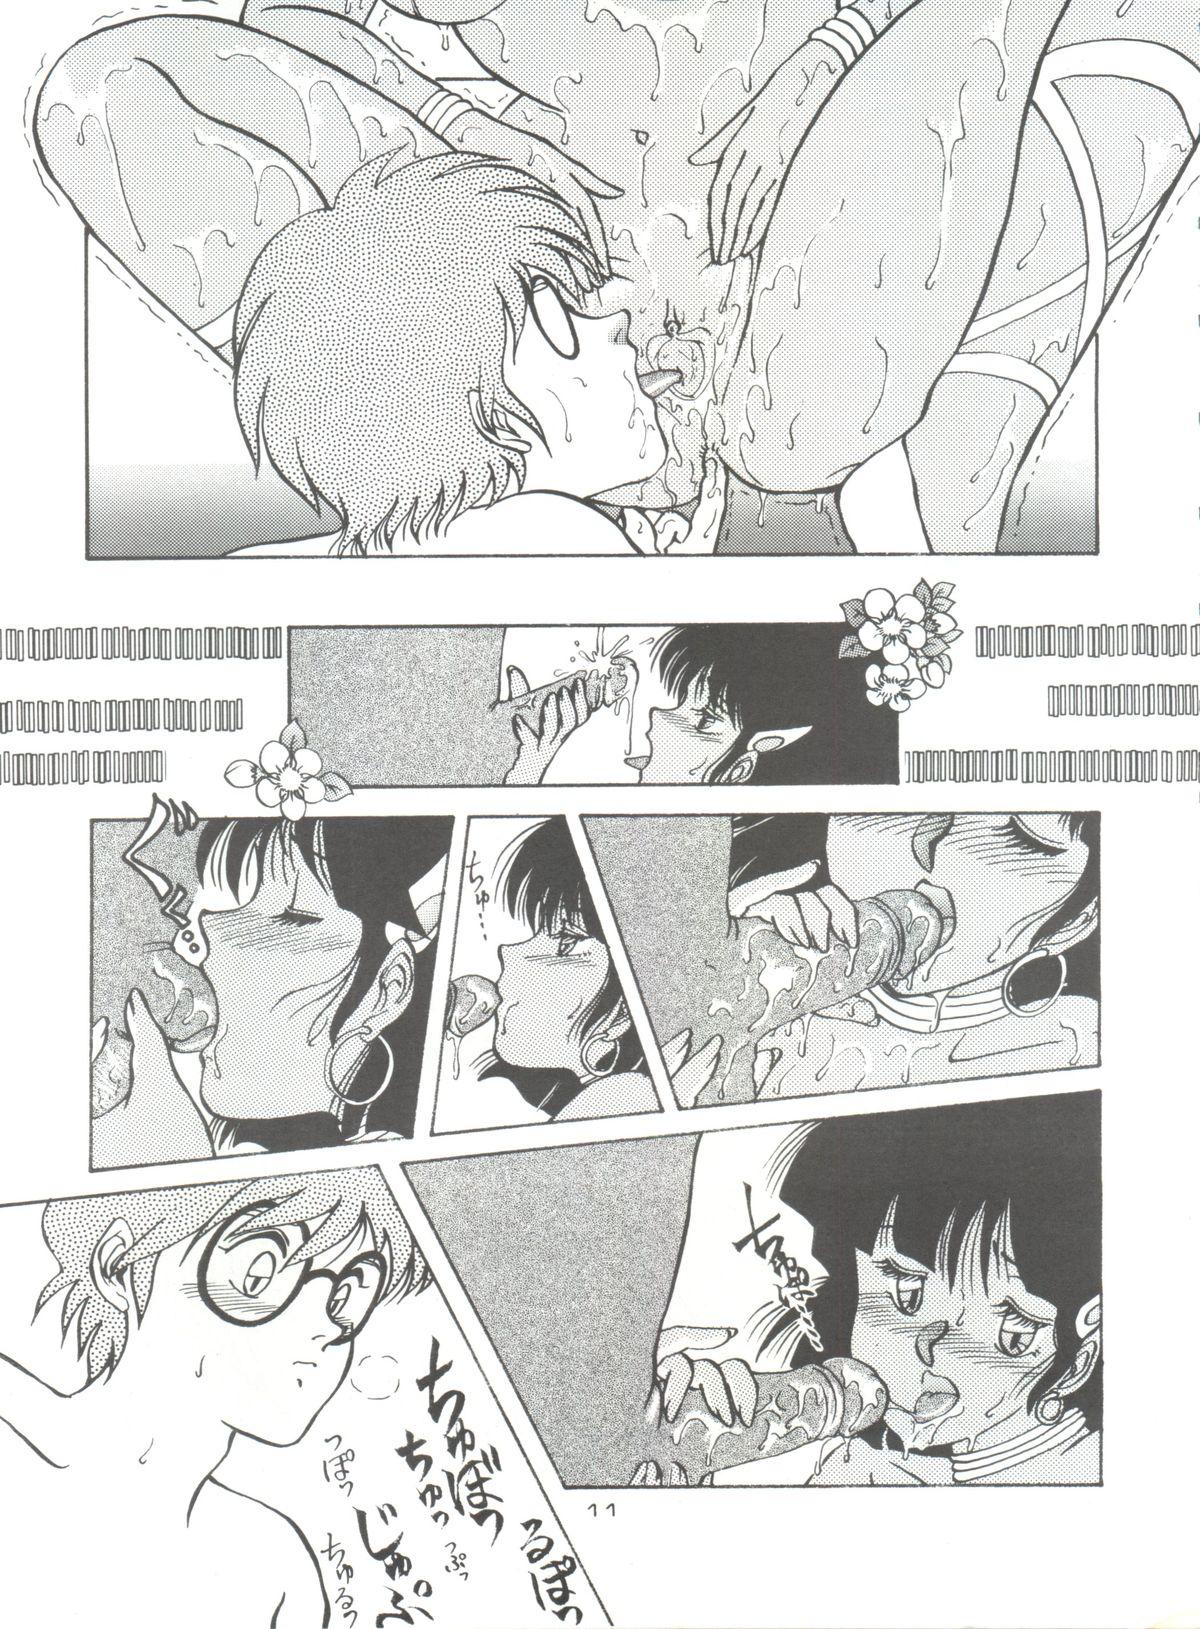 Casado Nadia Girls in Emerald Sea vol. 2 - Minies Club 23 - Fushigi no umi no nadia Amateur Free Porn - Page 11